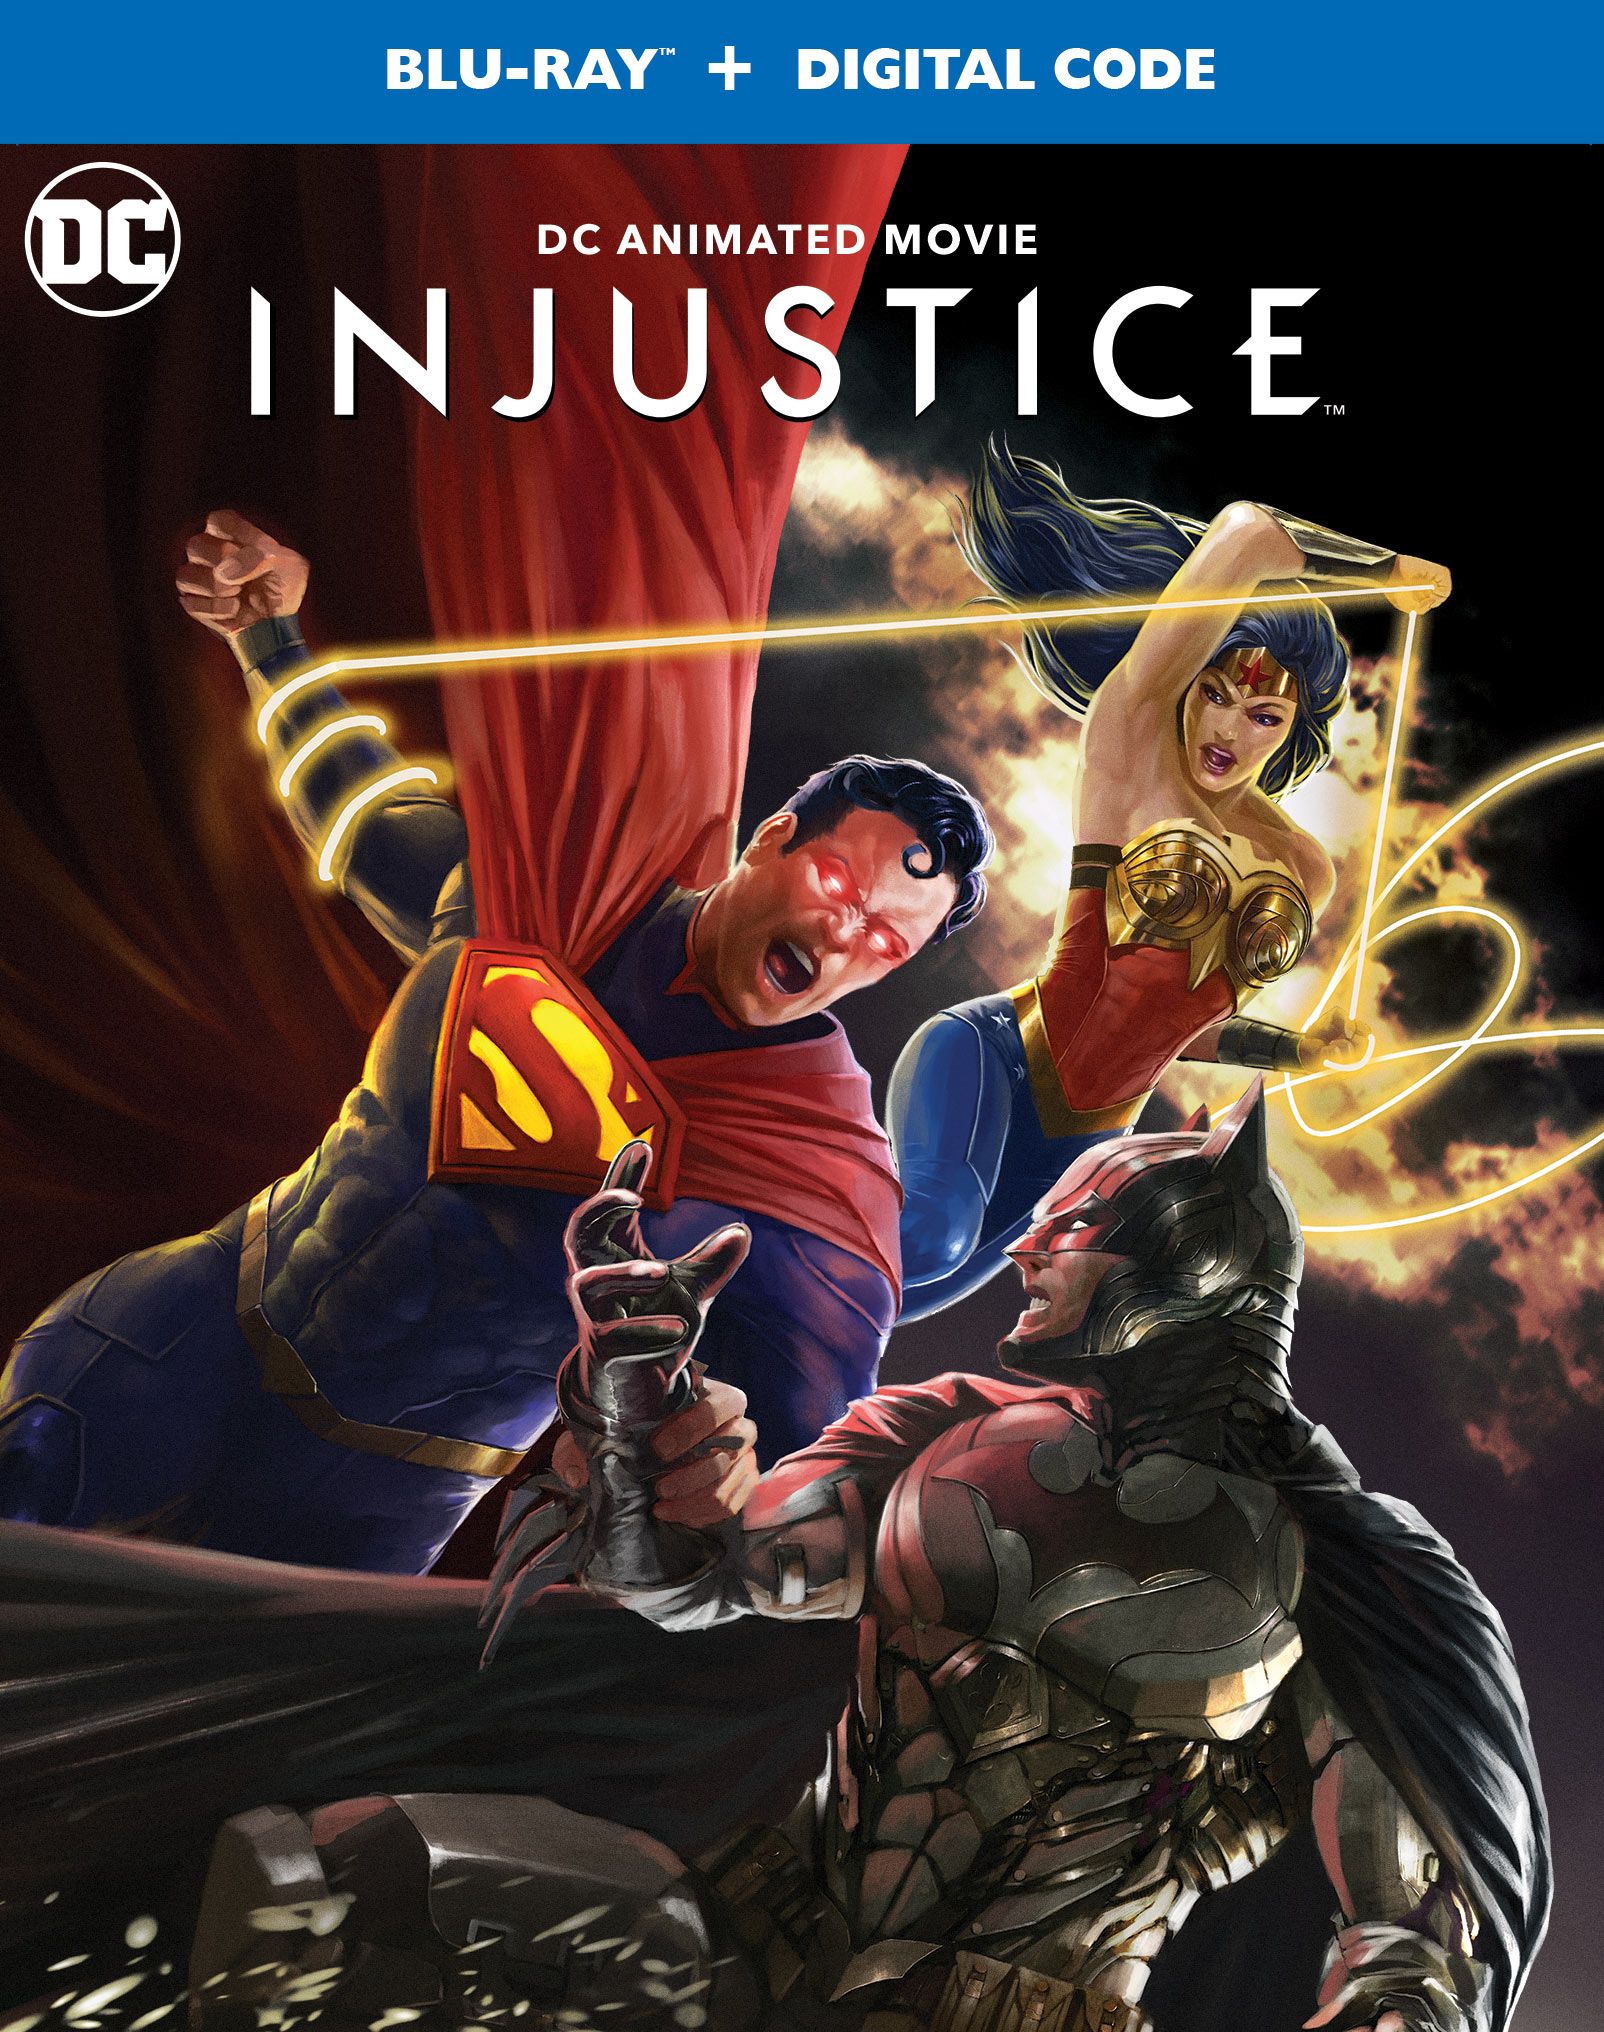 Injustice animated movie Blu-ray and digital box art